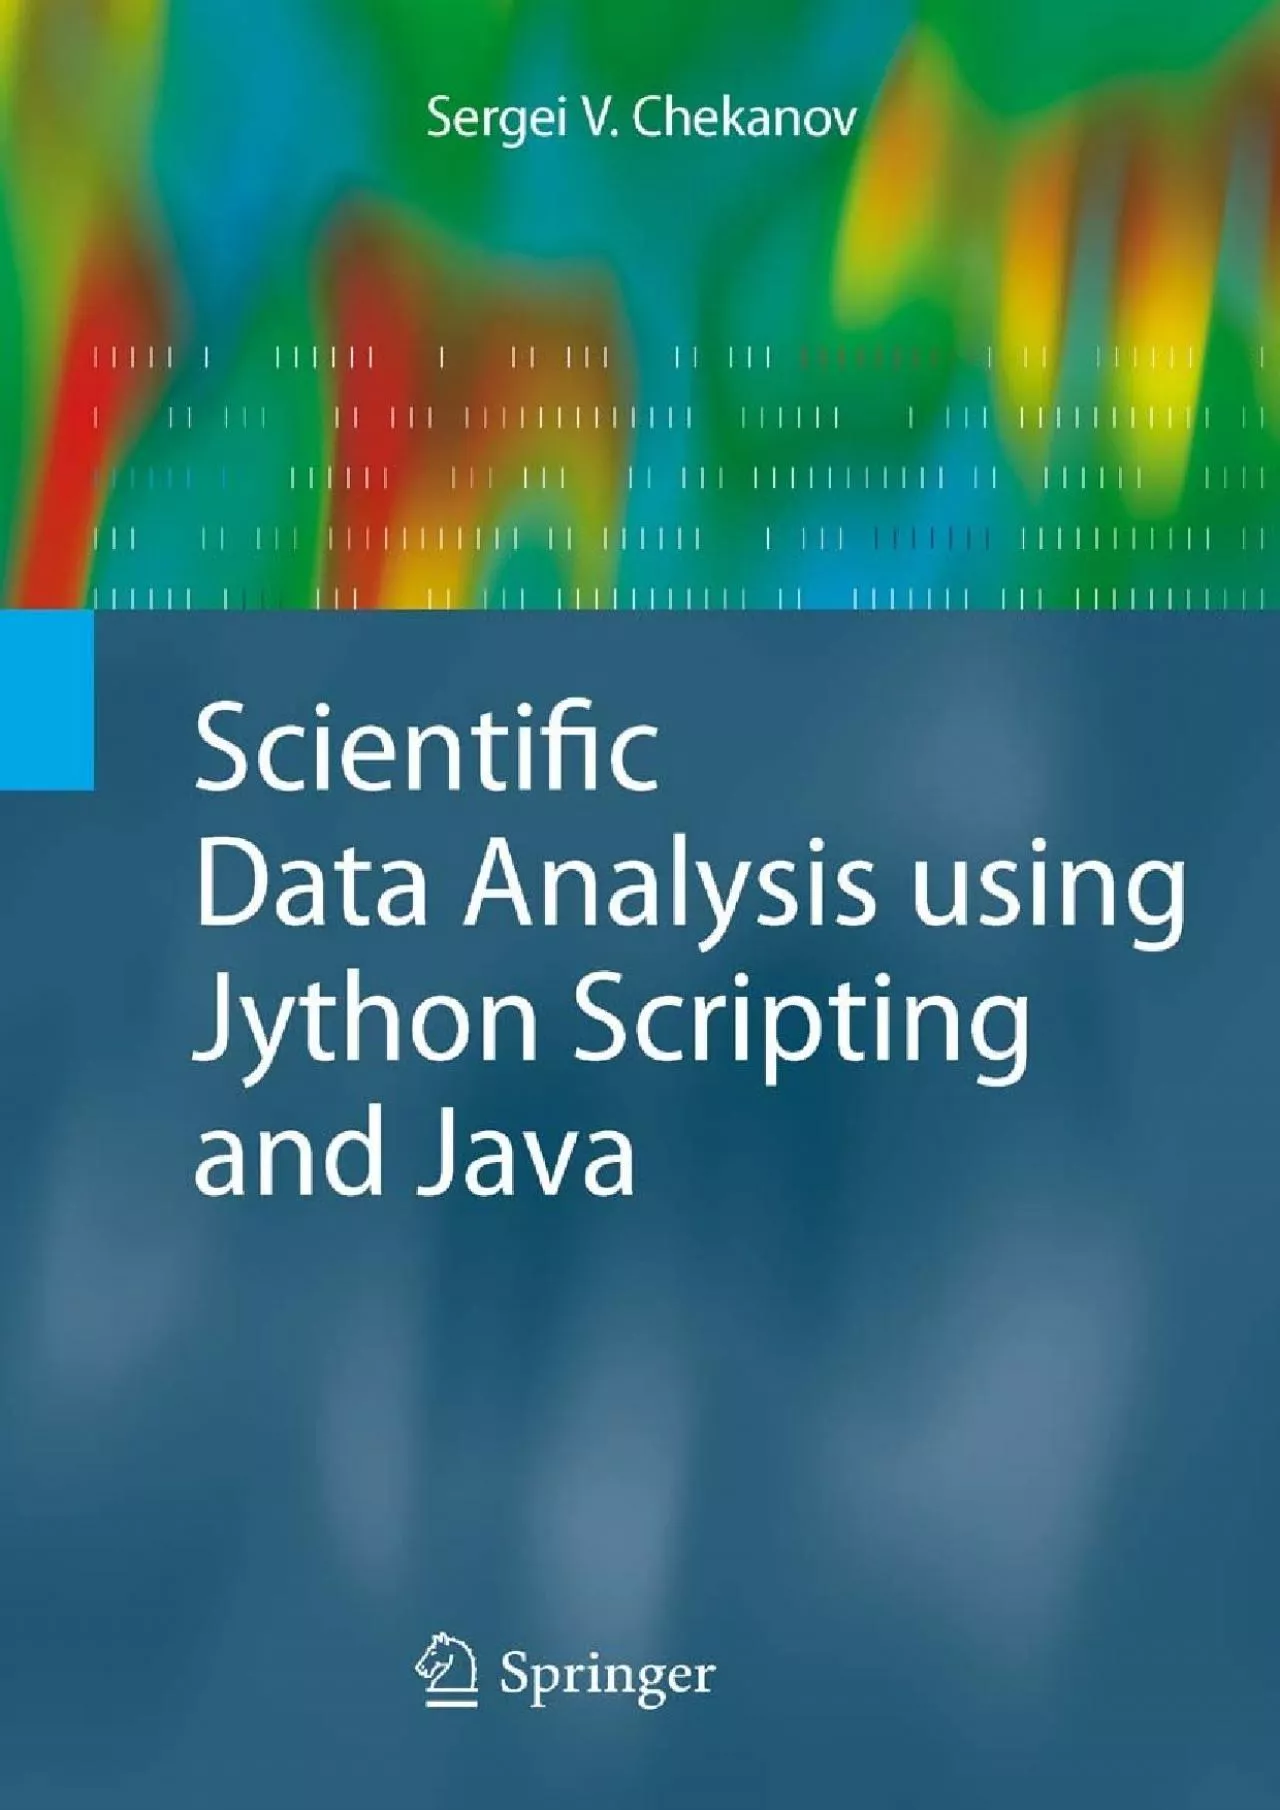 [FREE]-Scientific Data Analysis using Jython Scripting and Java (Advanced Information